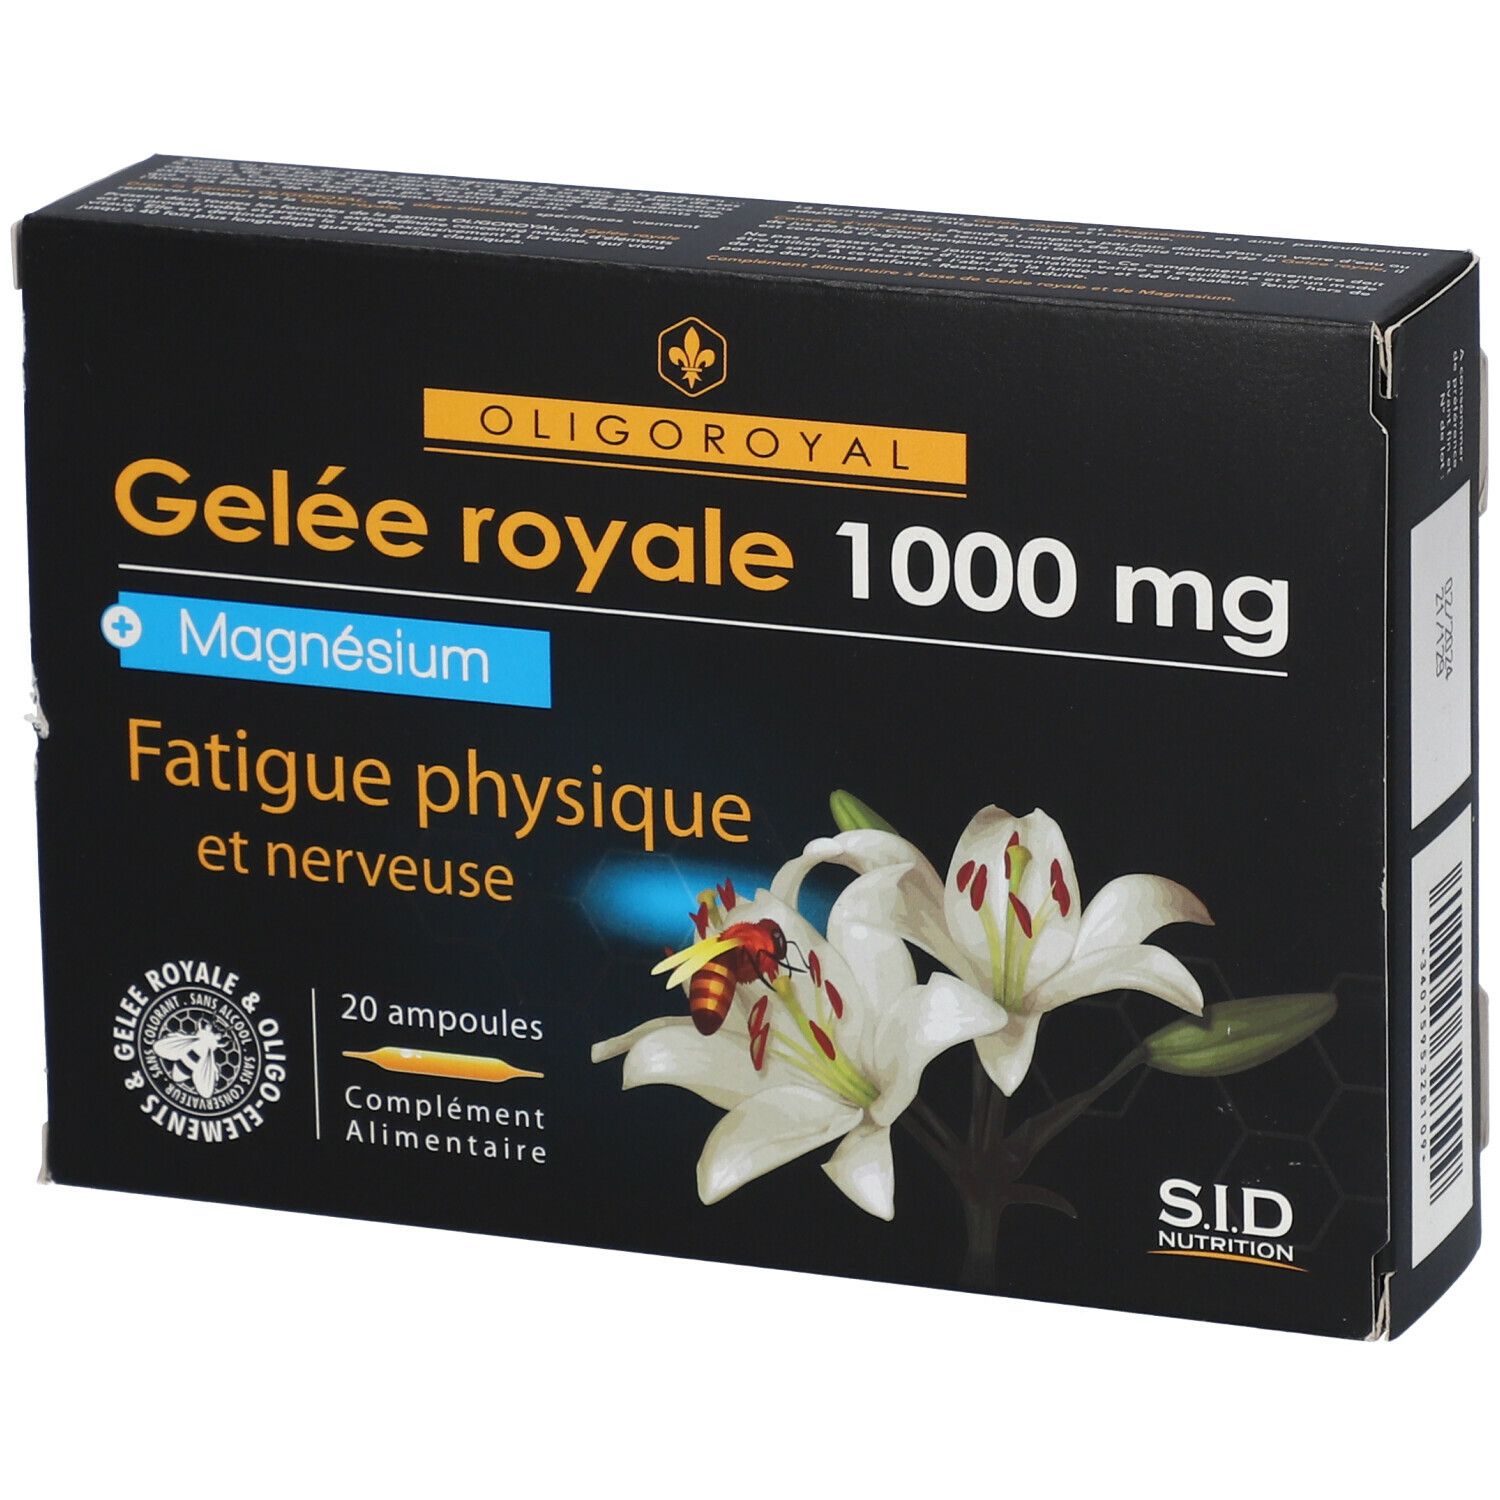 Image of SID Nutrition Oligoroyal Gelee Royale Magnesium